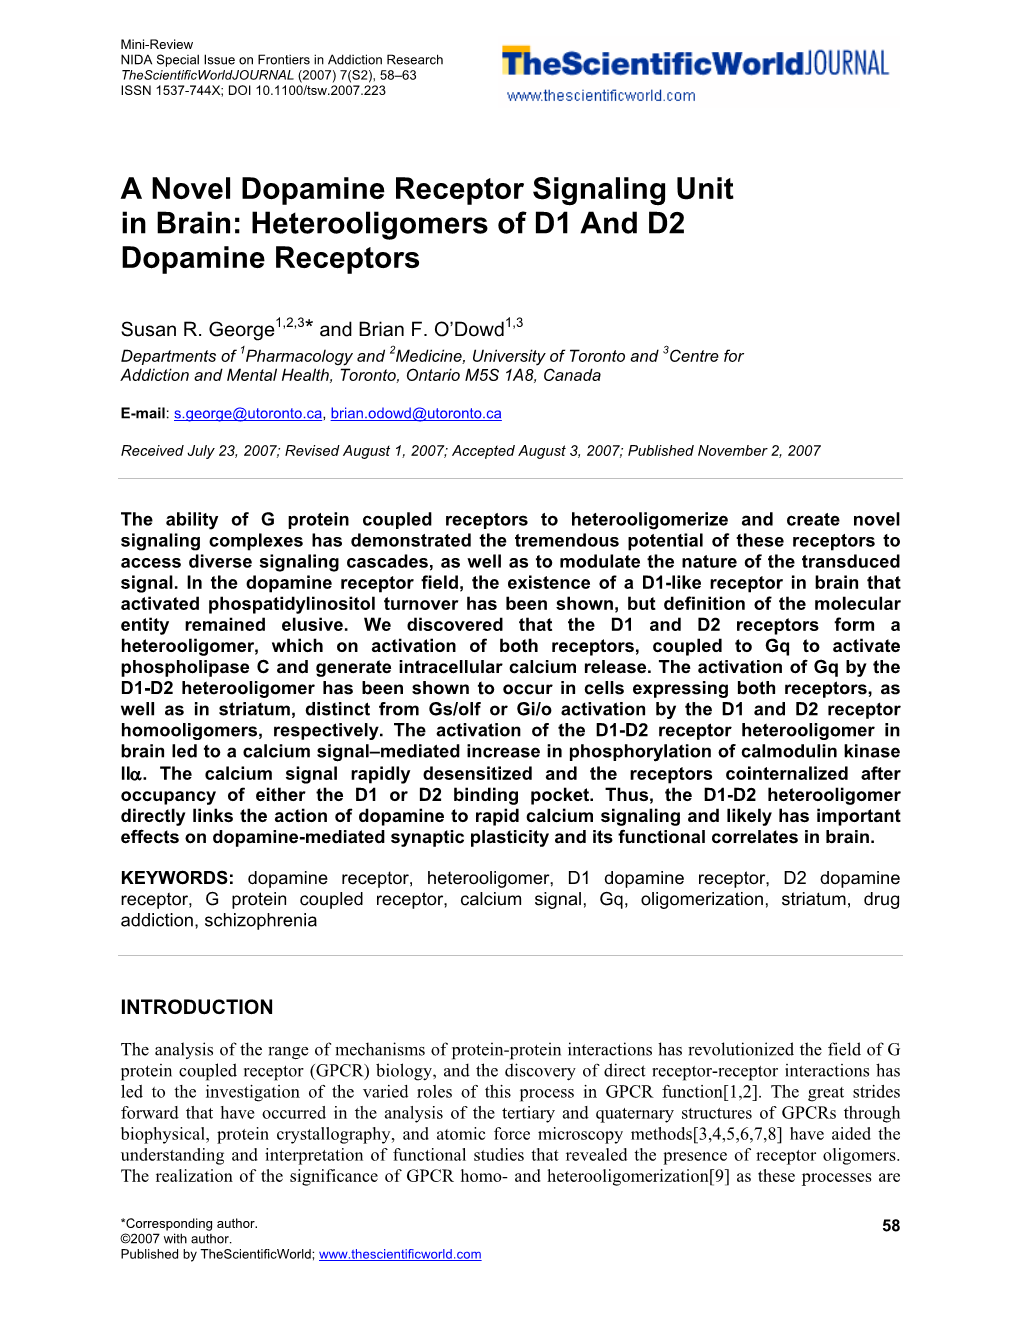 A Novel Dopamine Receptor Signaling Unit in Brain: Heterooligomers of D1 and D2 Dopamine Receptors